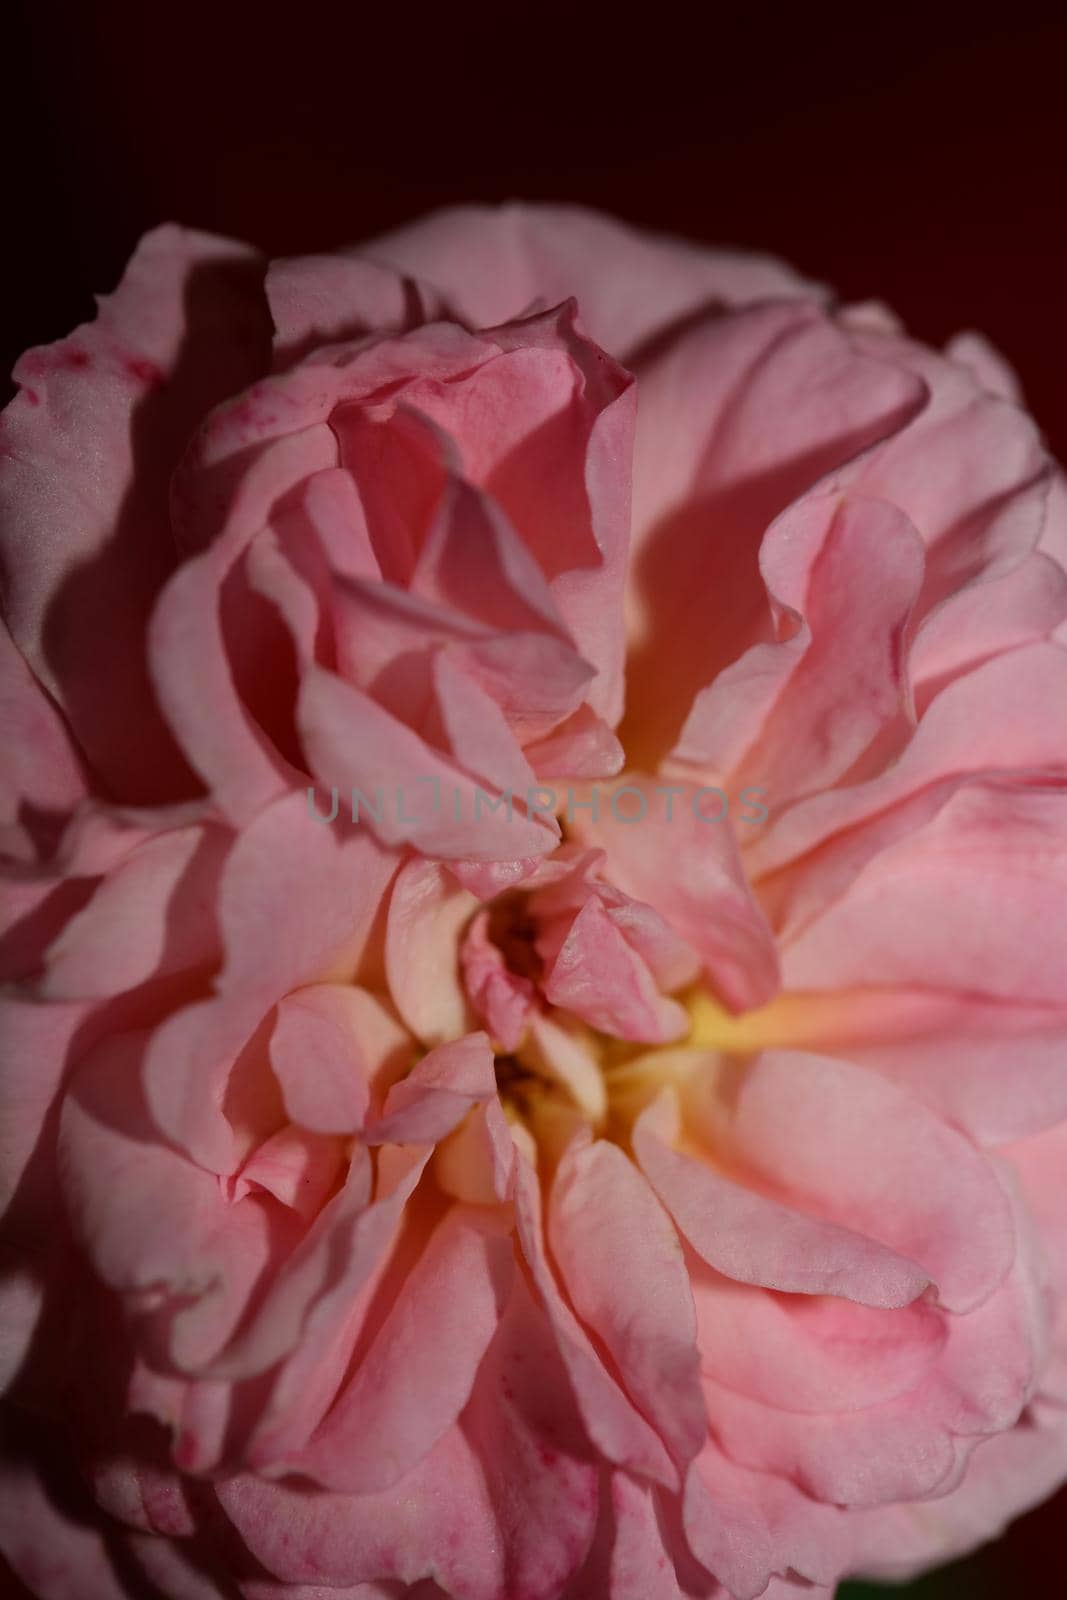 Pink rose flower blossom close up family rosaceae botanical background modern high quality big size print home decoration